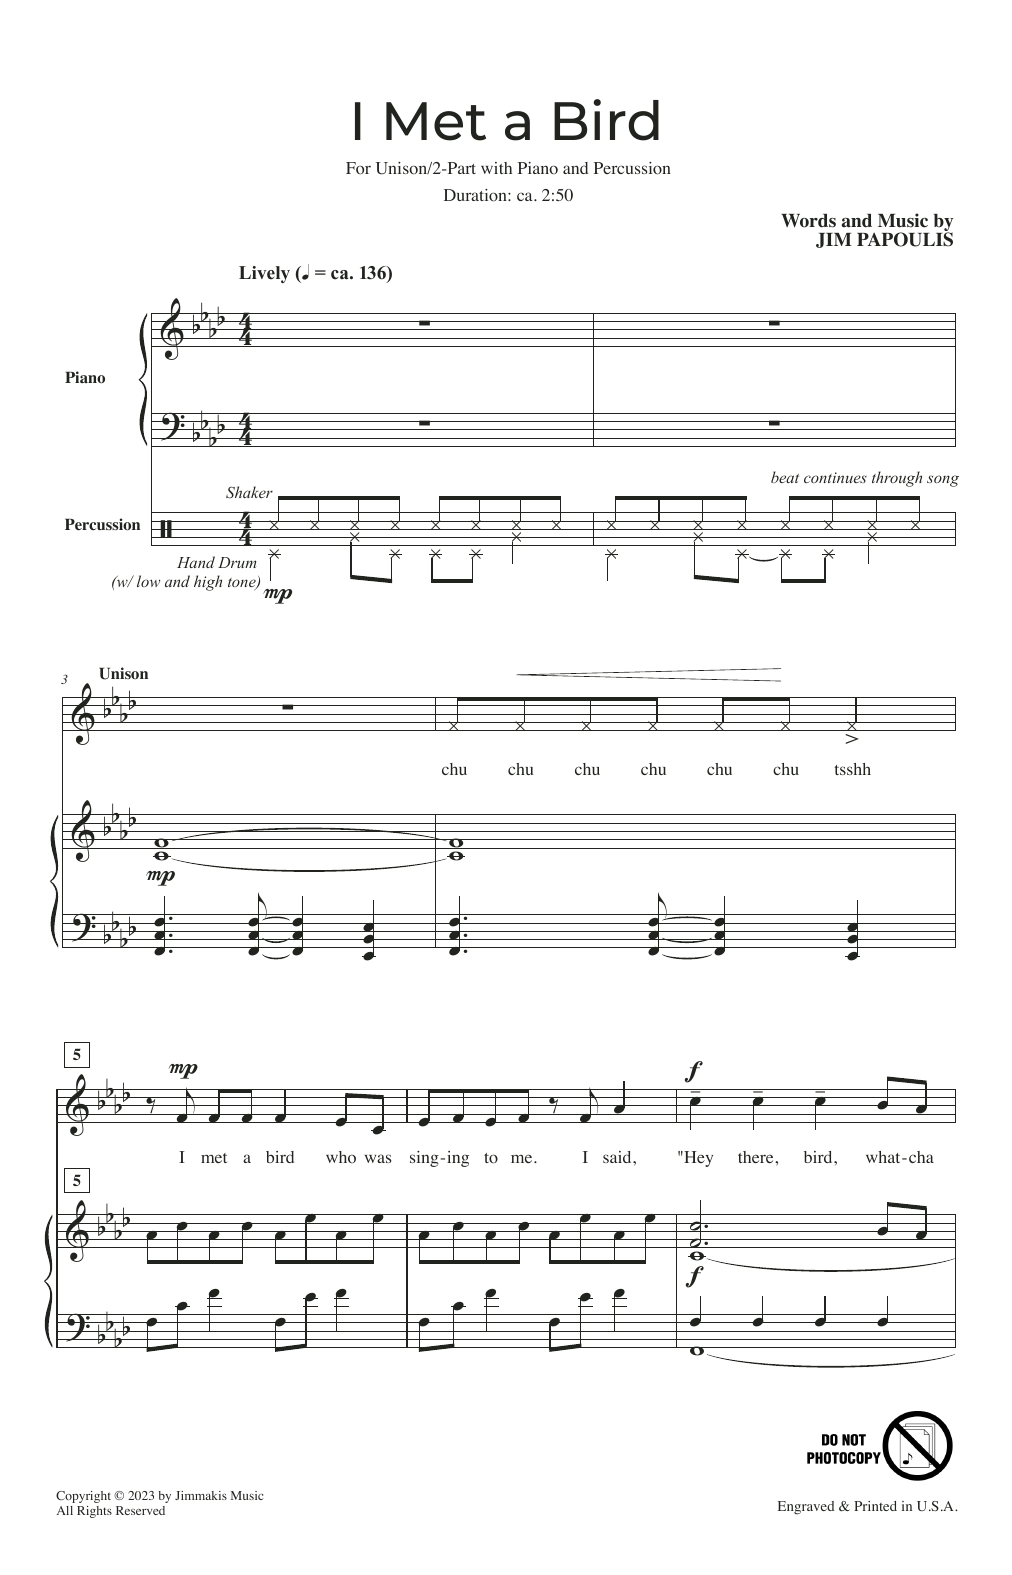 Jim Papoulis I Met A Bird Sheet Music Notes & Chords for Unison Choir - Download or Print PDF